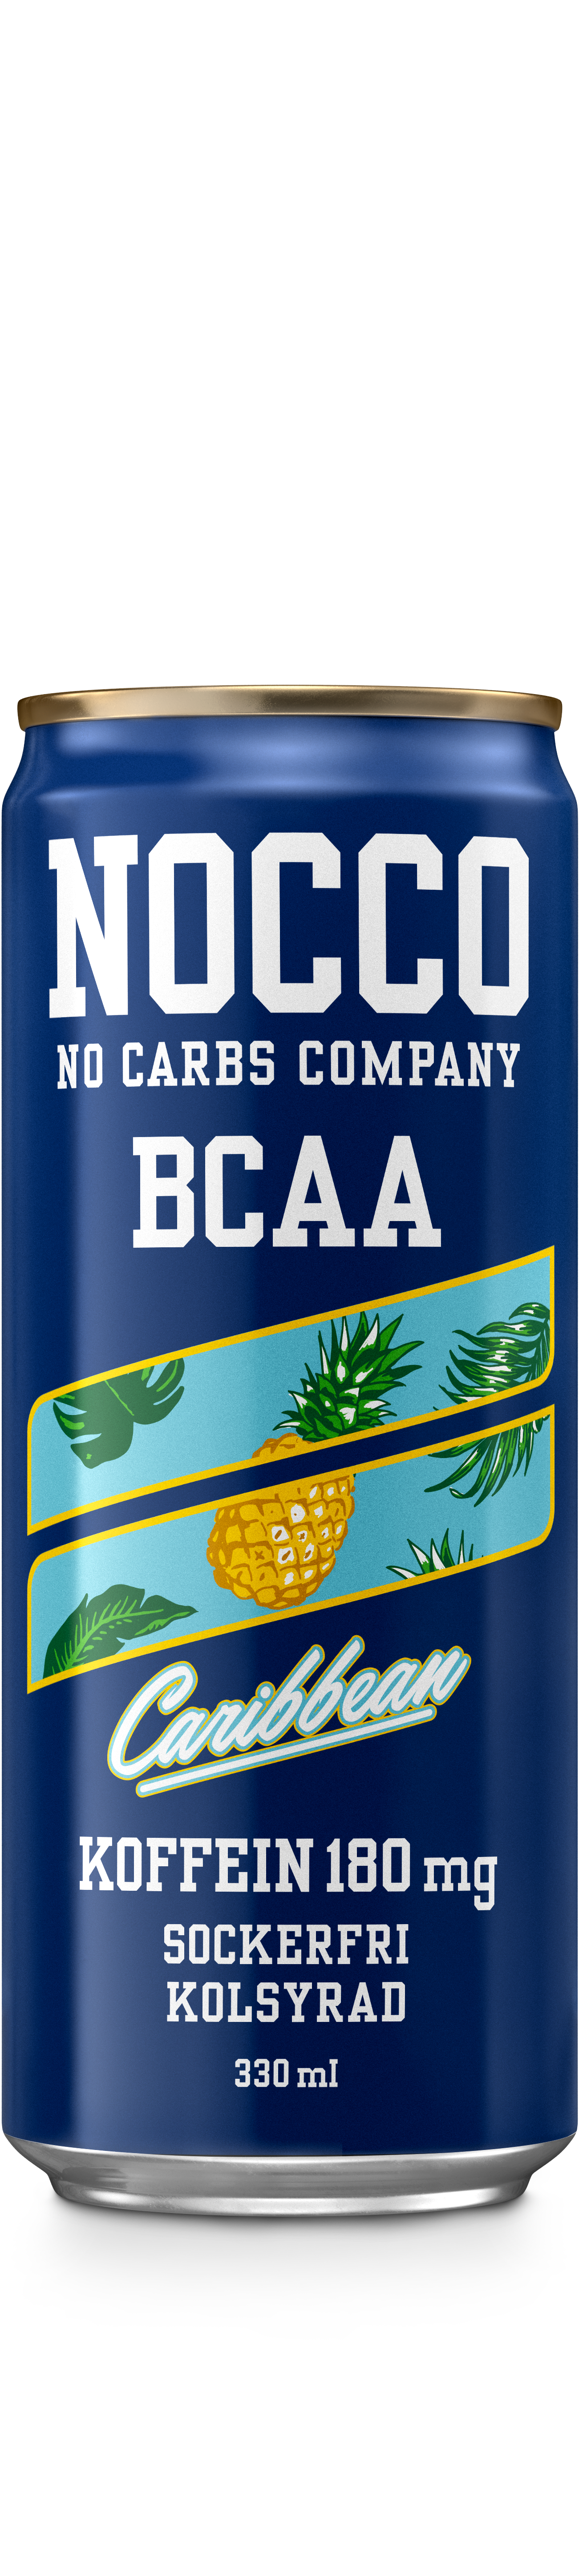 Nocco BCAA - Carribean - burk